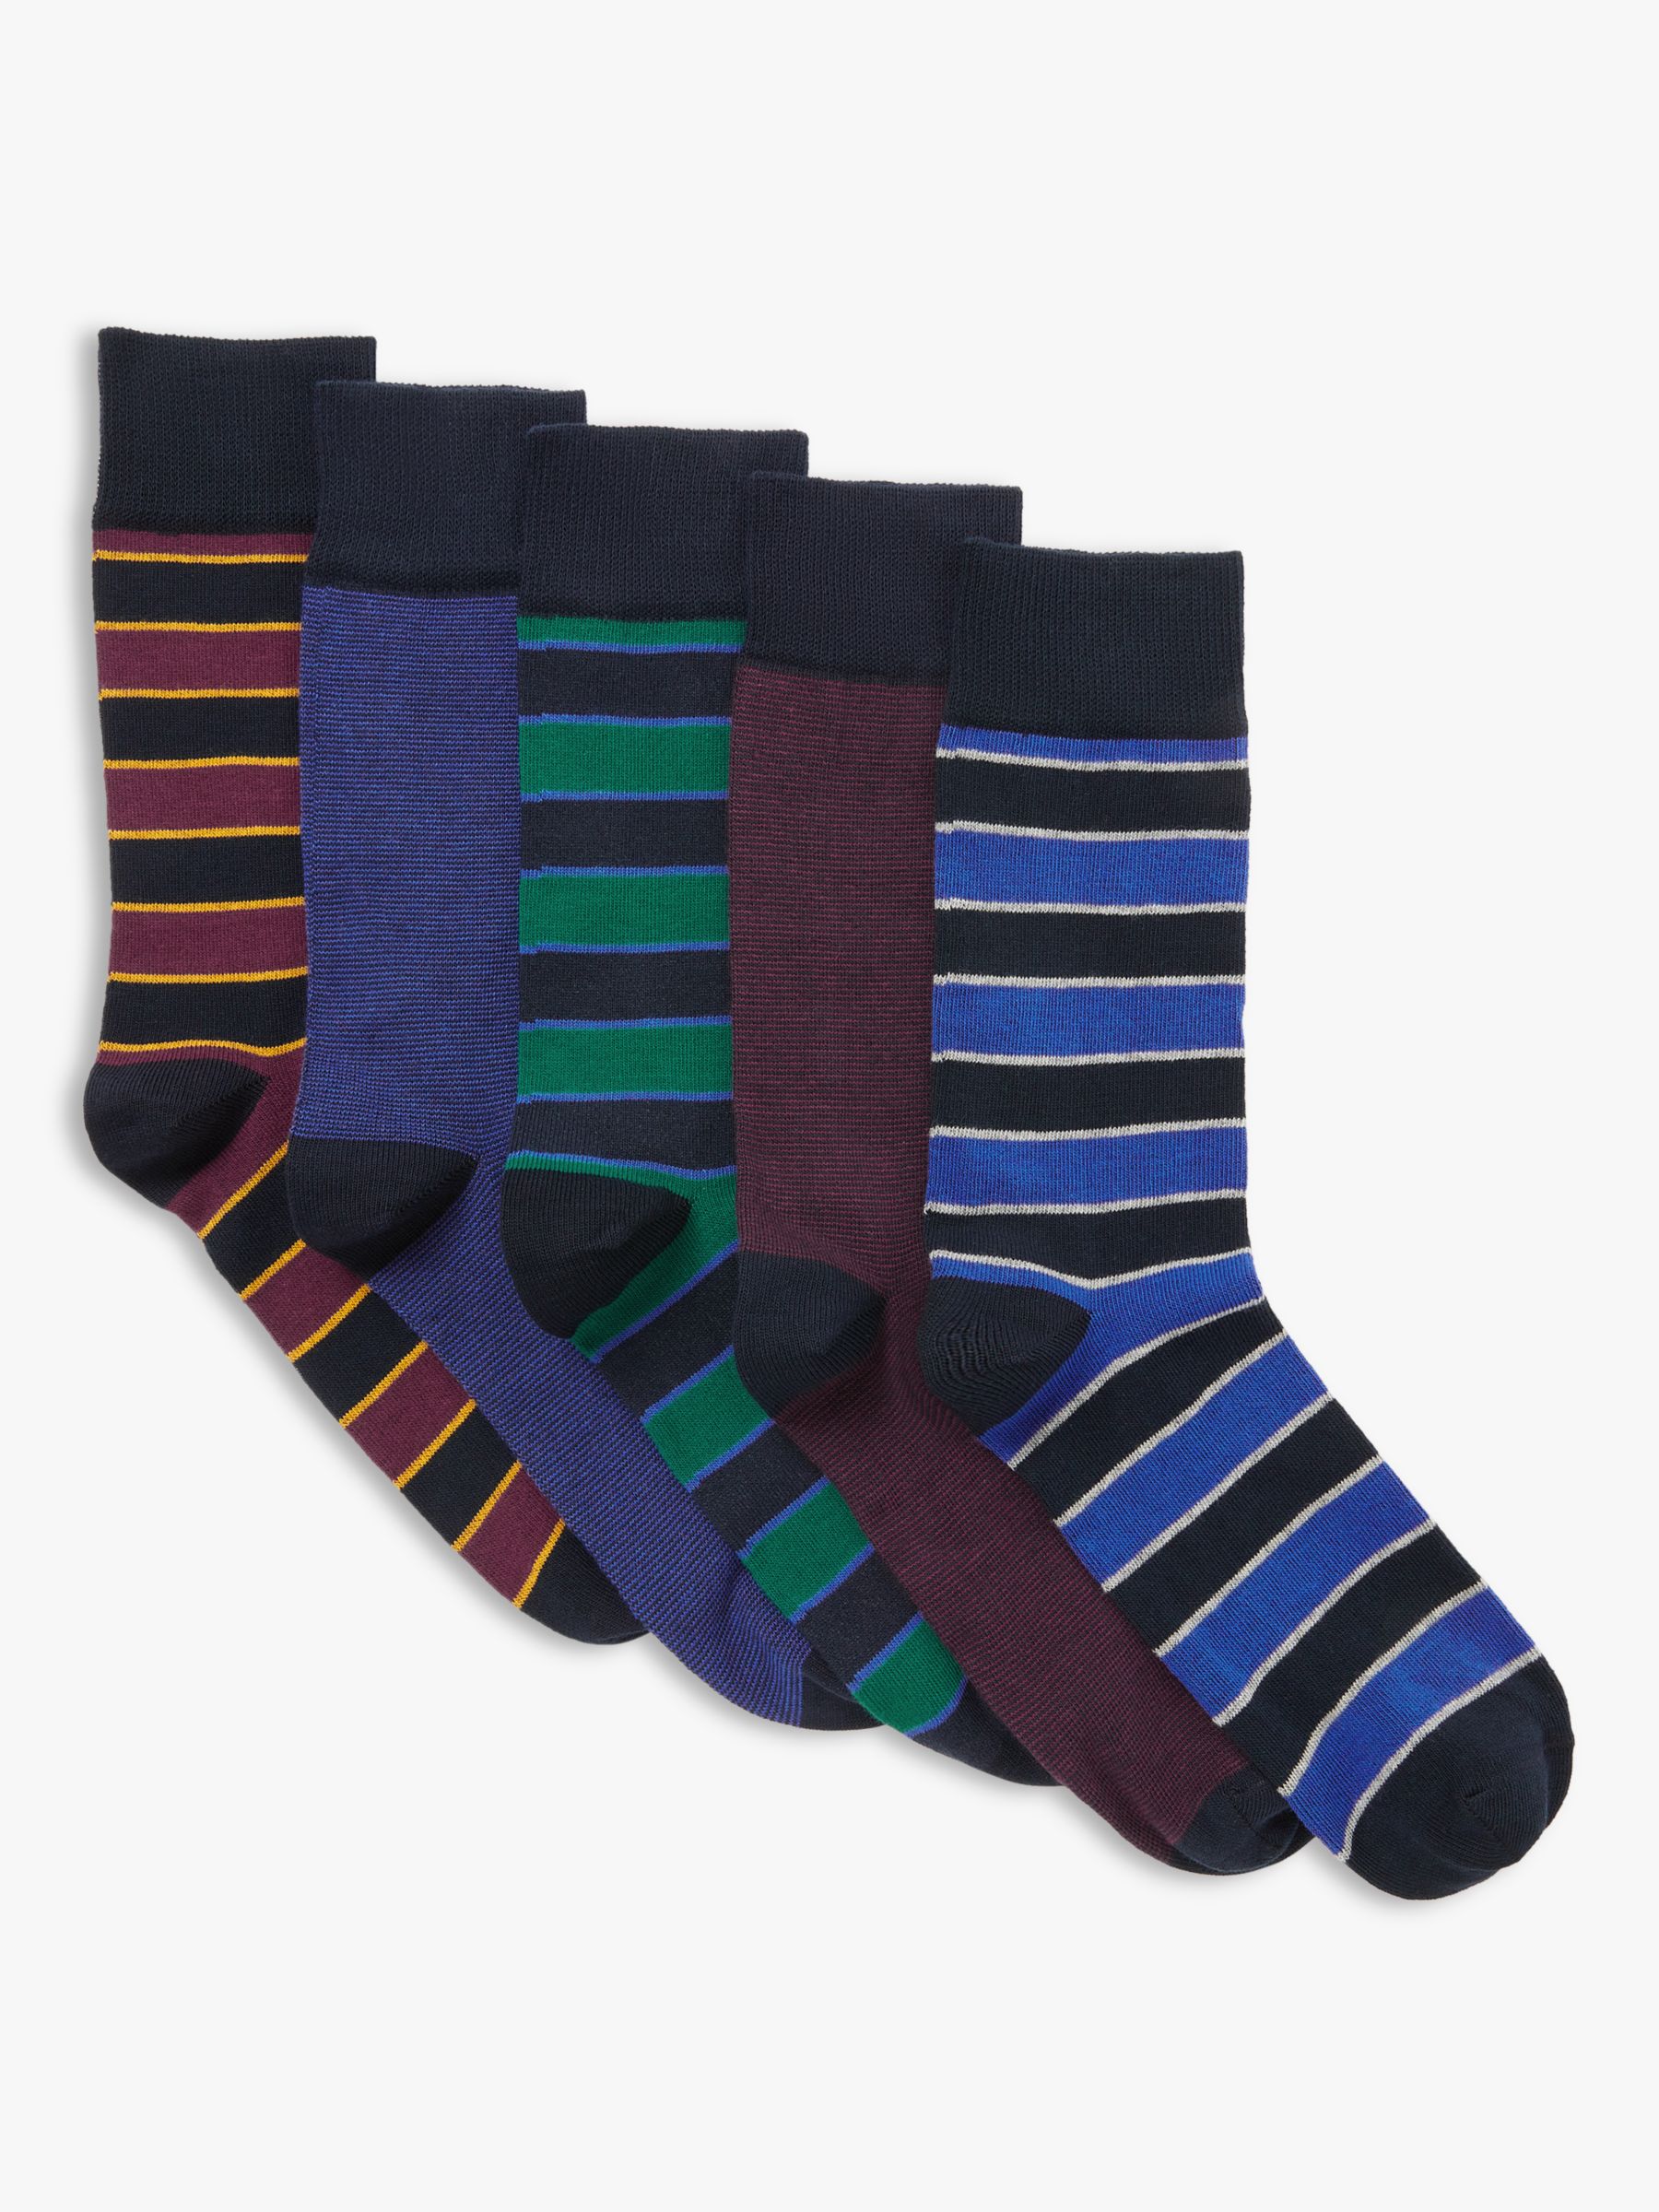 John Lewis & Partners Cotton Rich Striped Men's Socks, Pack of 5, Multi